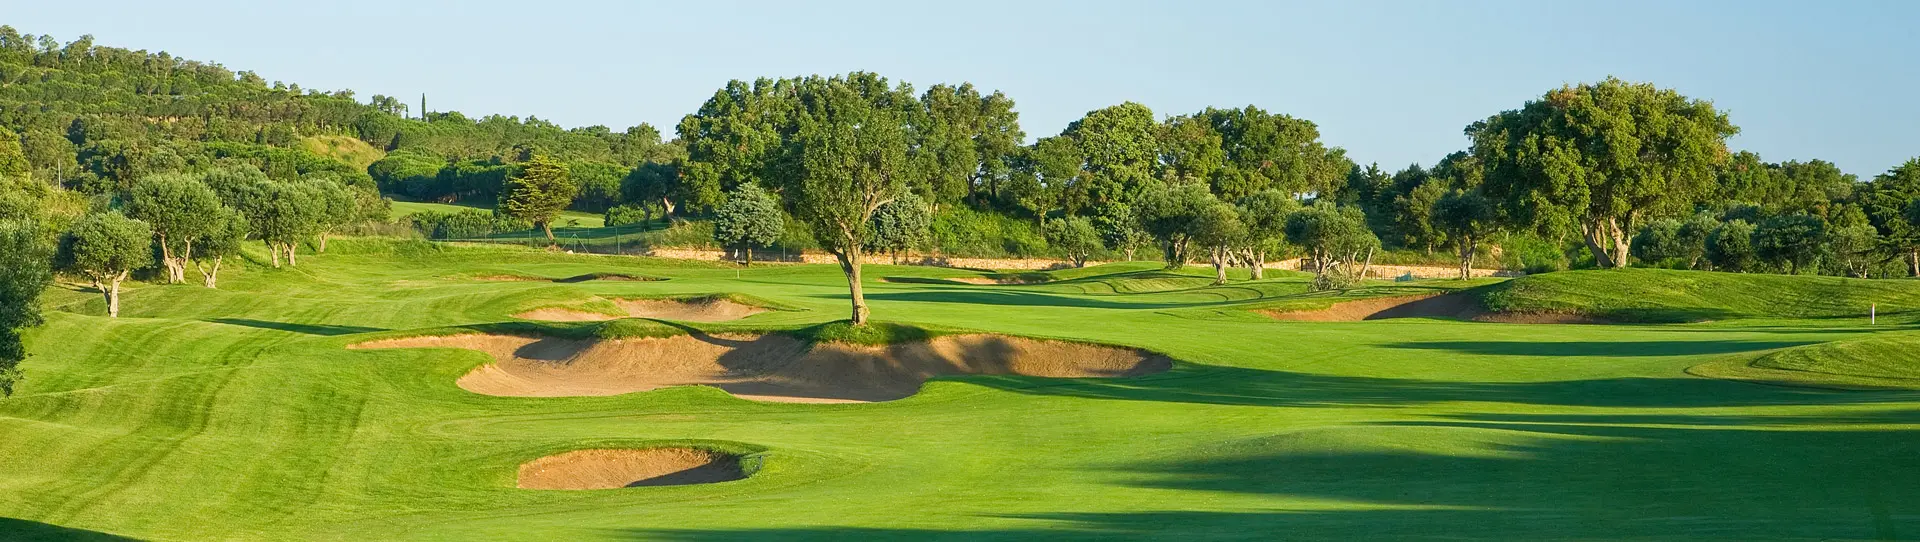 Spain Golf Driving Range - Golf d'Aro - Mas Nou Academy - Photo 3